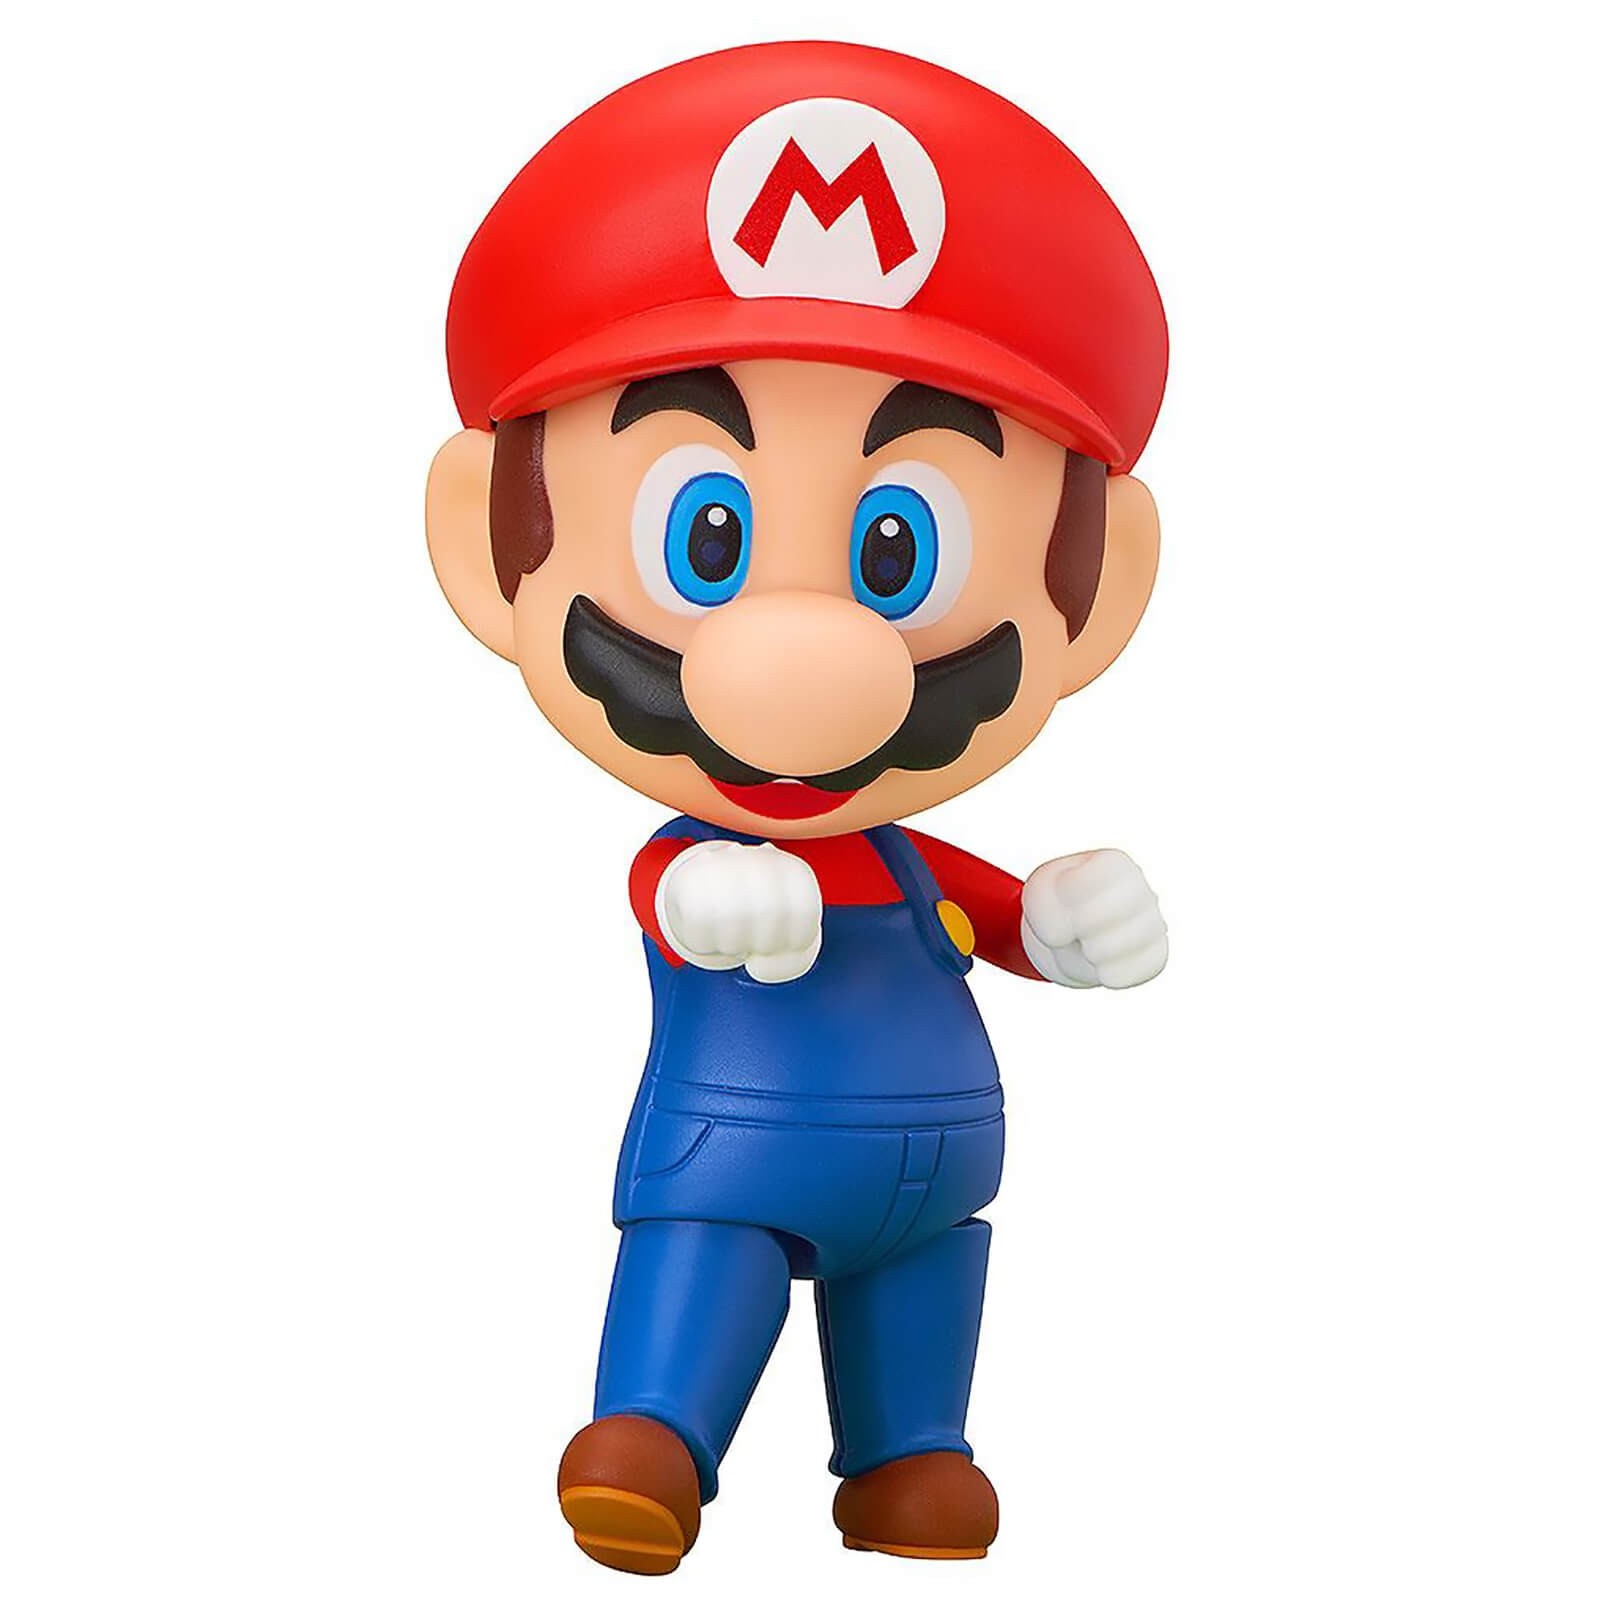 Nintendo Nendoroid Action Figure - Mario